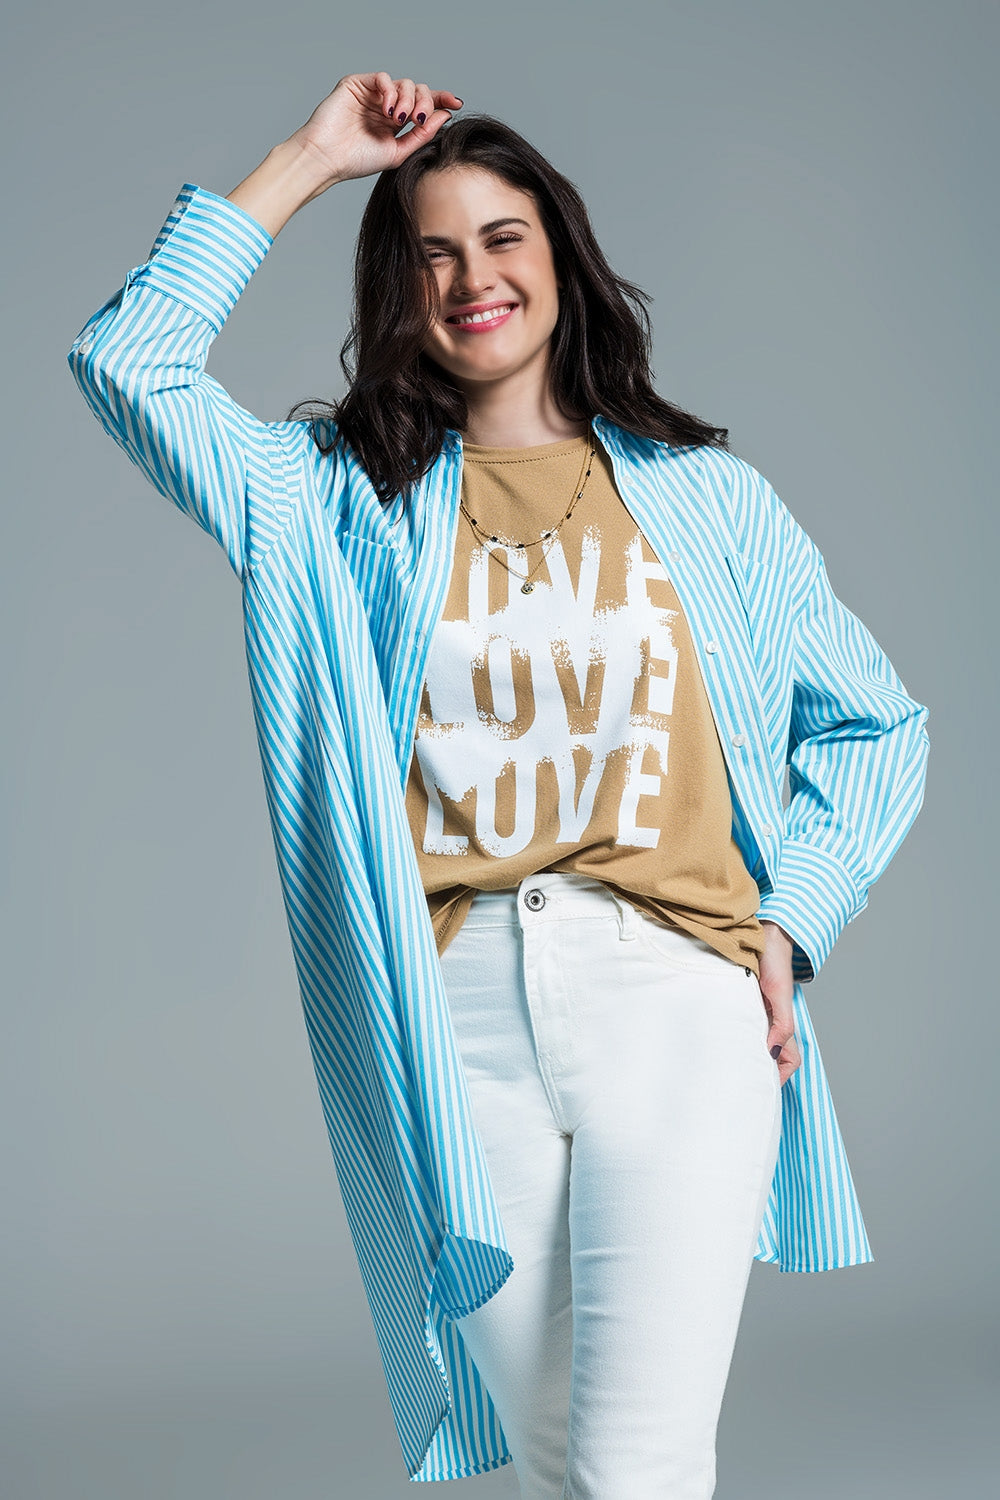 Q2 Light blue oversized blouse with white stripes